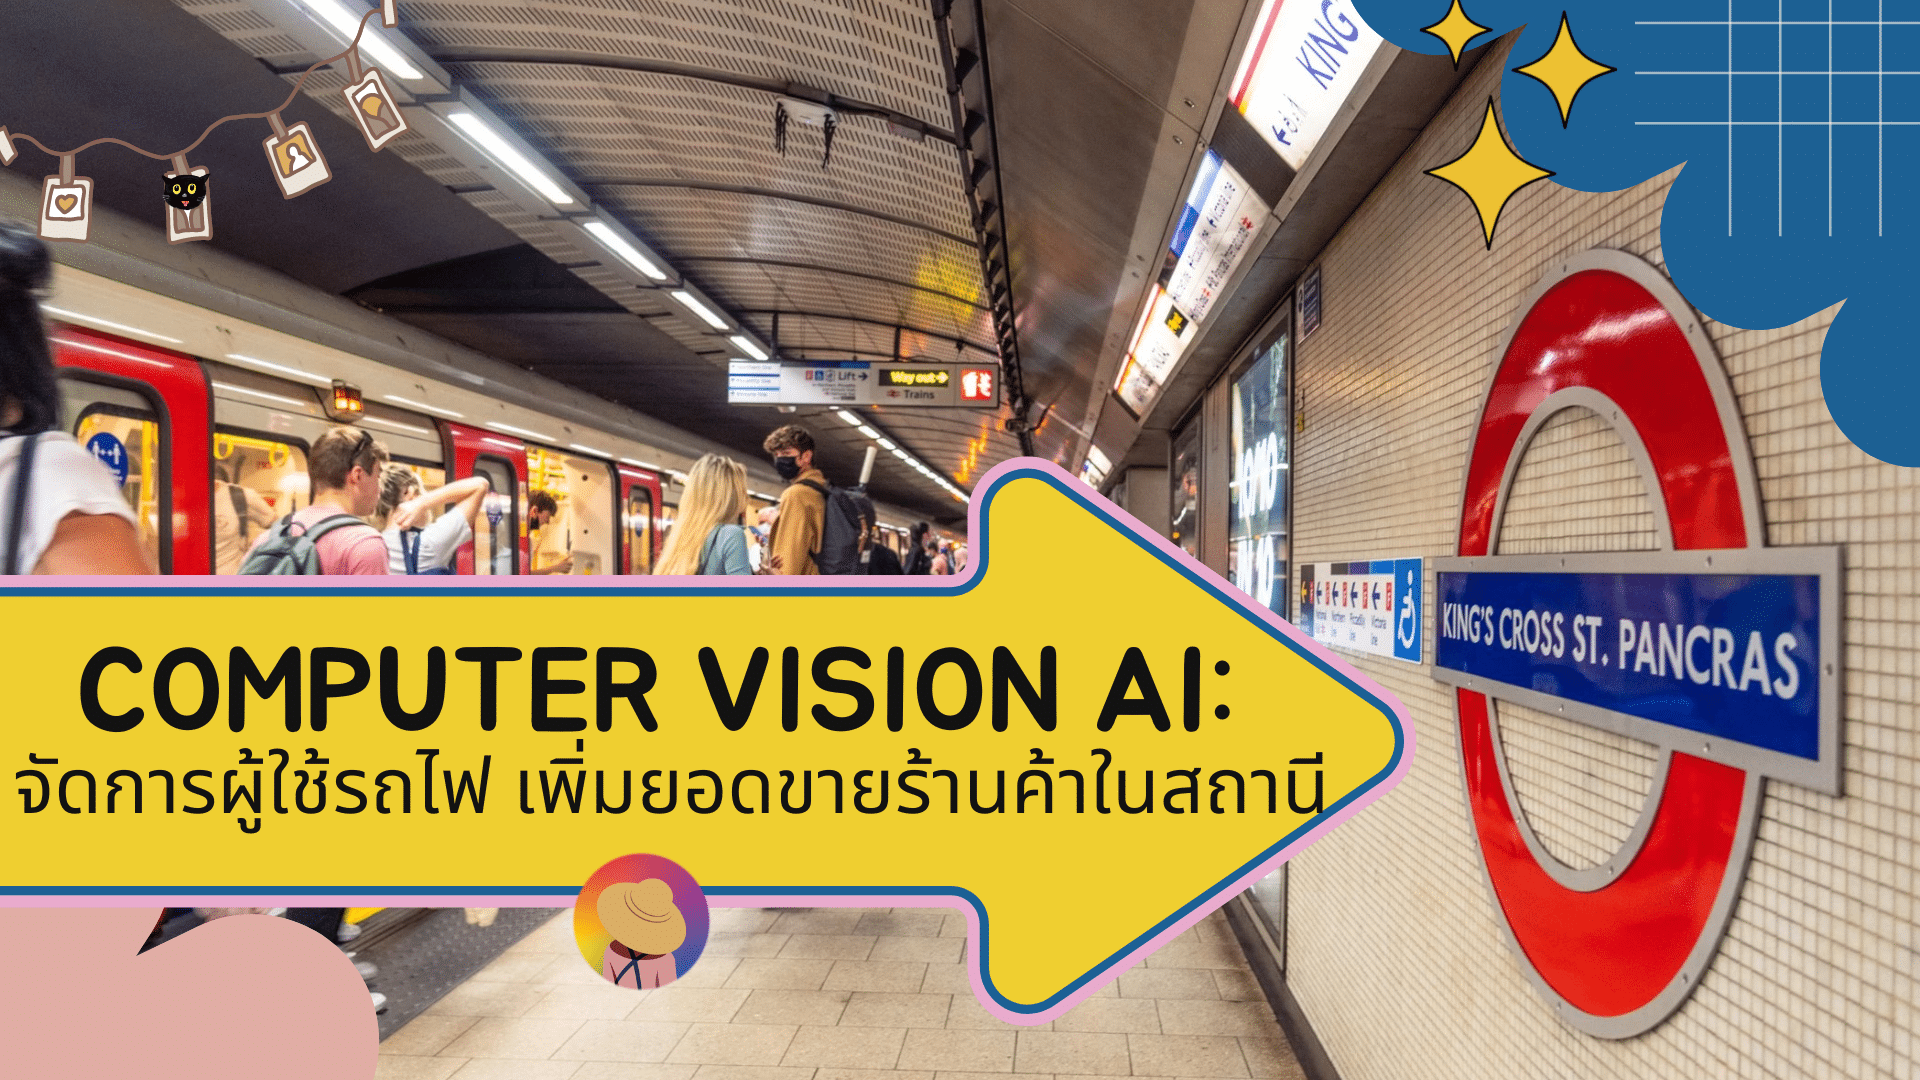 Computer Vision AI: ช่วยจัดการผู้ใช้รถไฟ เพิ่มยอดขายร้านค้าในสถานี